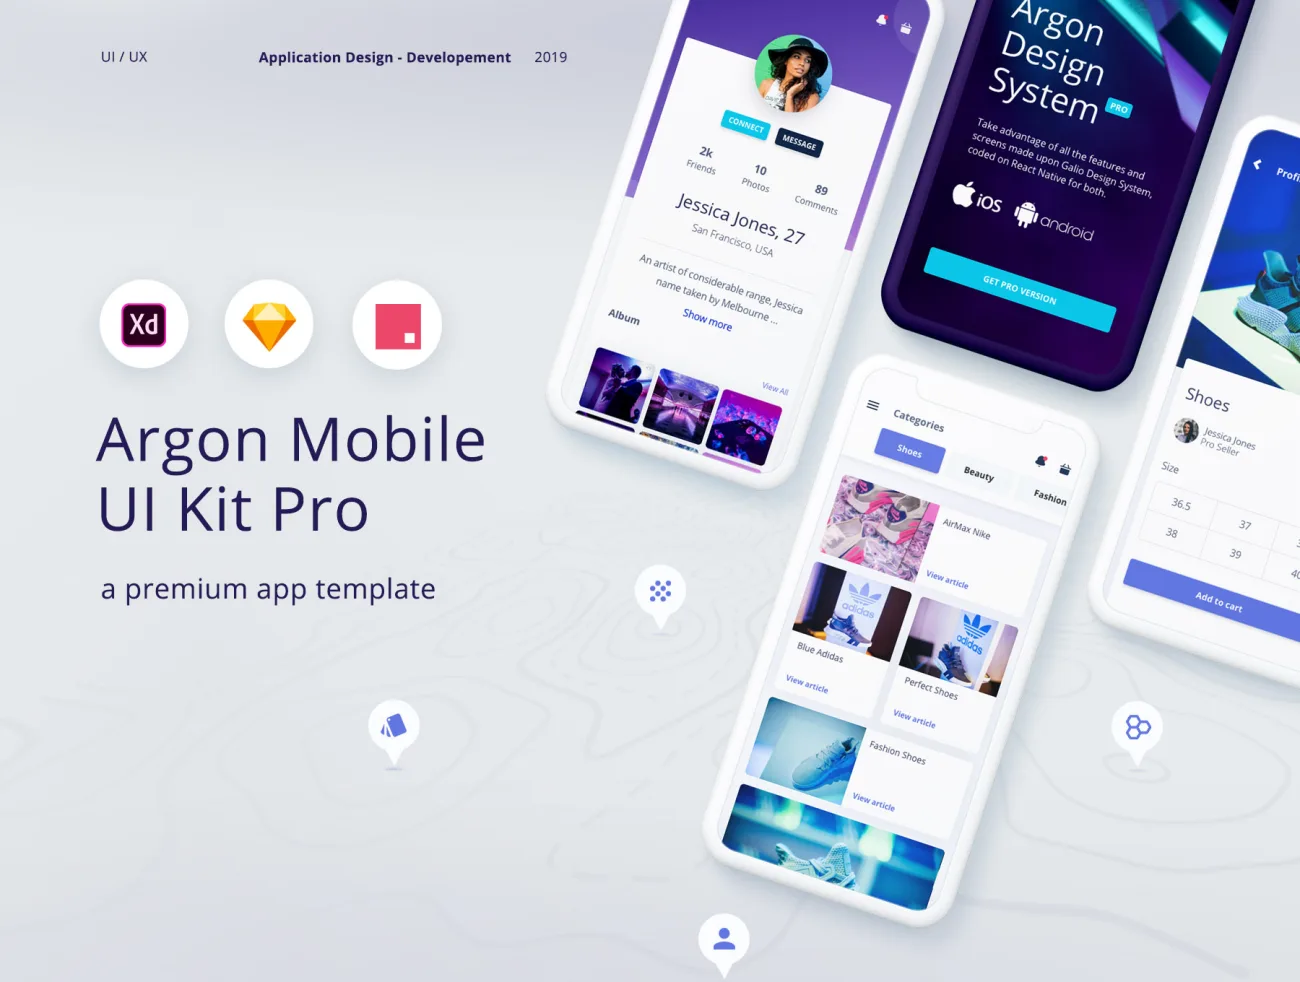 Argon Mobile UI Kit Pro 简约整洁的手机端通用UI套件-UI/UX-到位啦UI